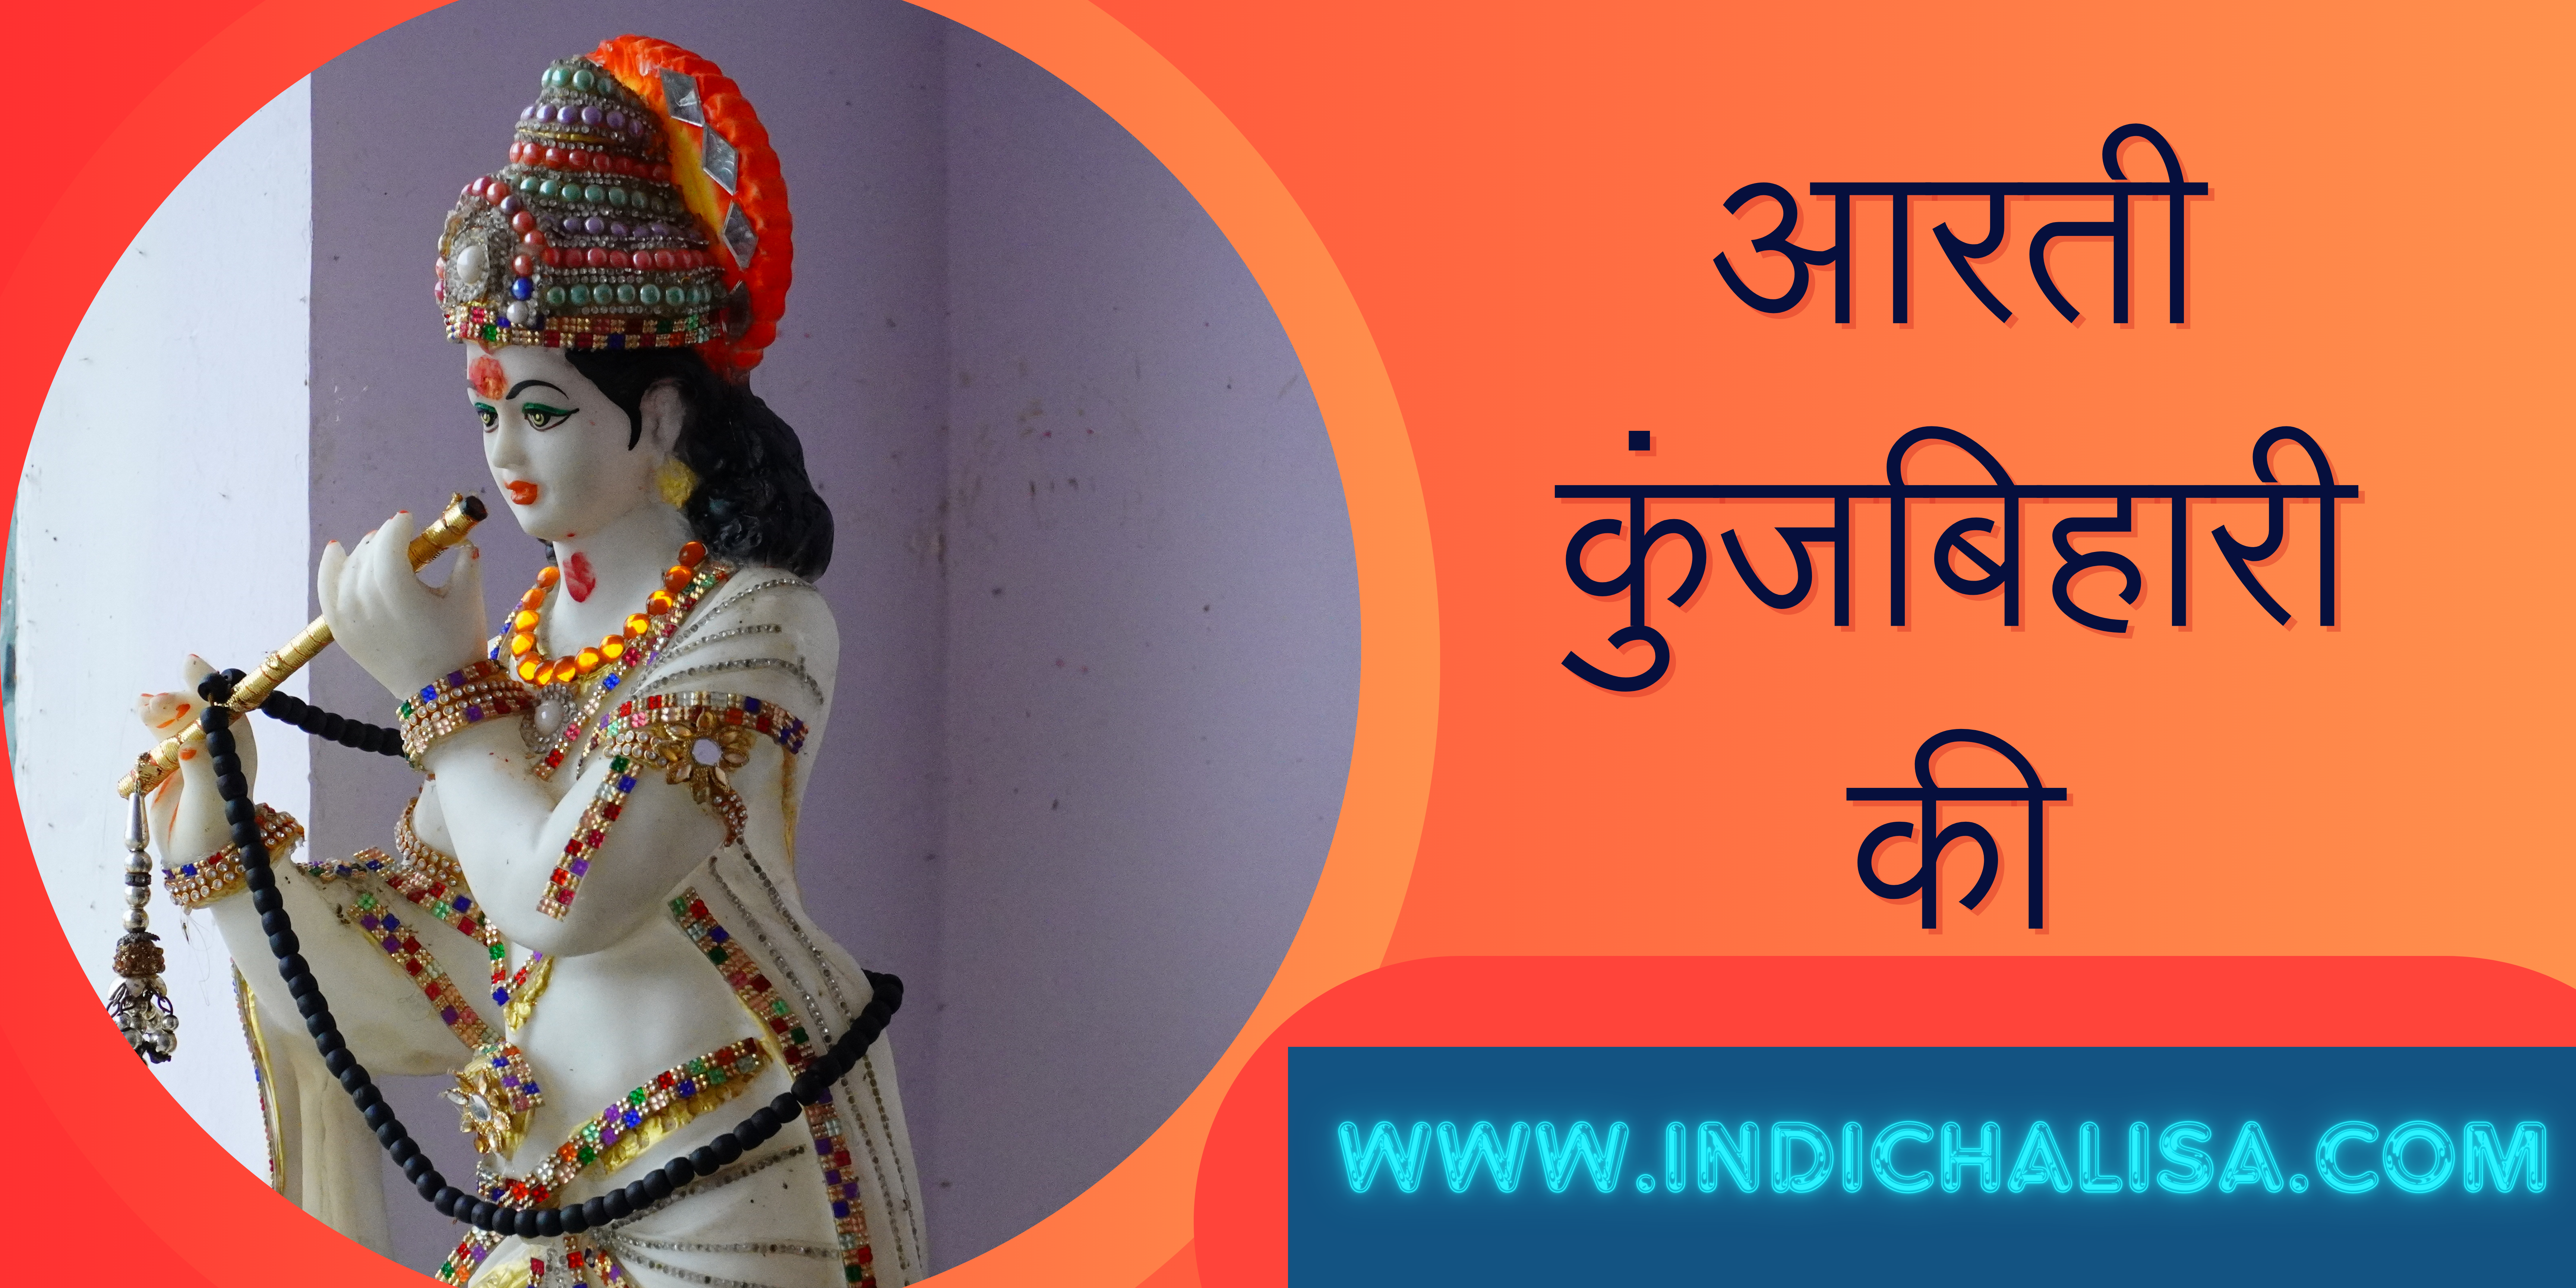 Krishna Ji Aarti In Hindi|Krishna Ji Aarti In Hindi|Indichalisa|Indichalisa